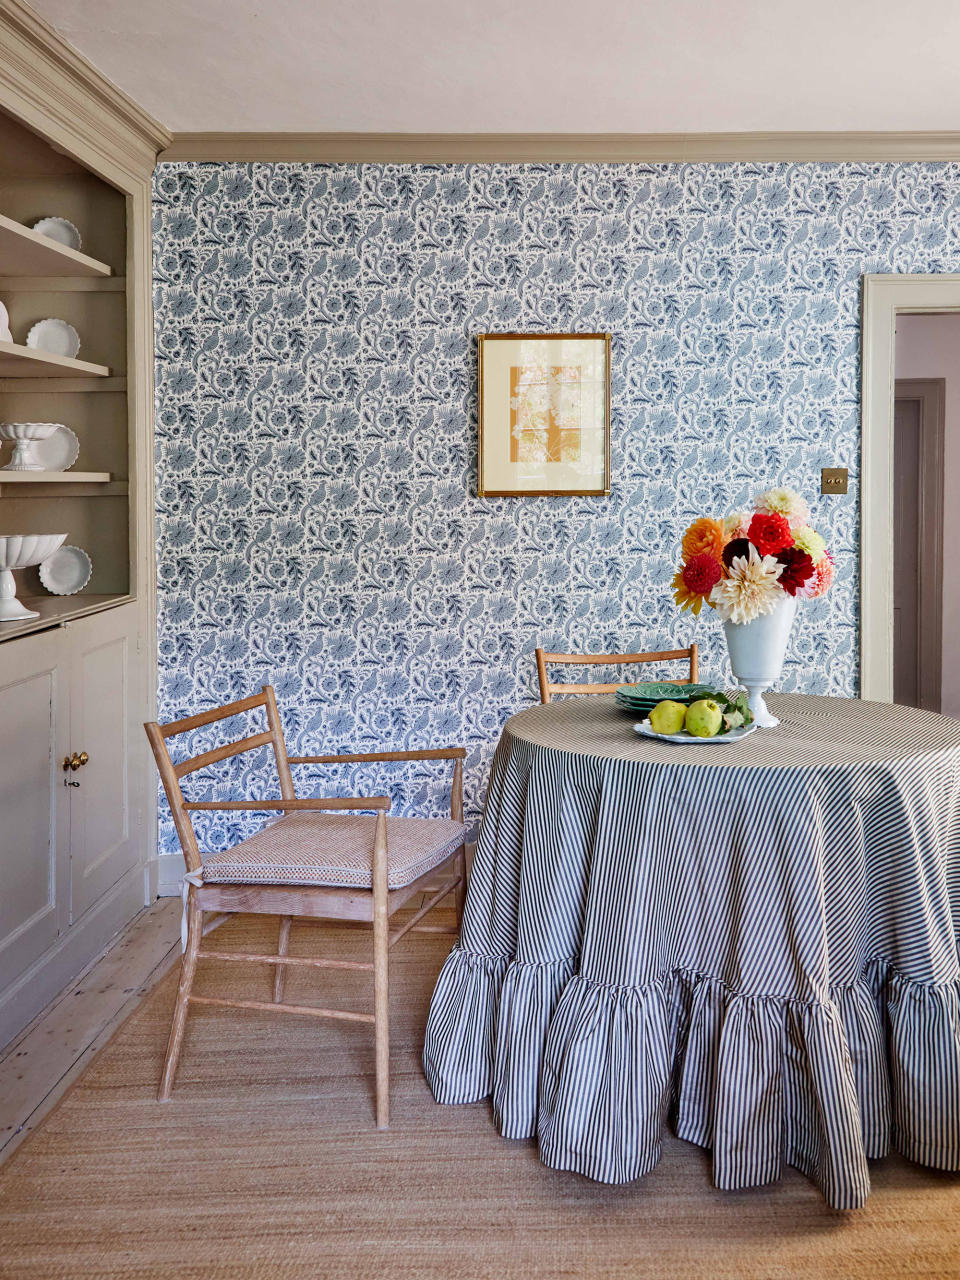 Dado Atelier x Daydress wallpaper in dining room